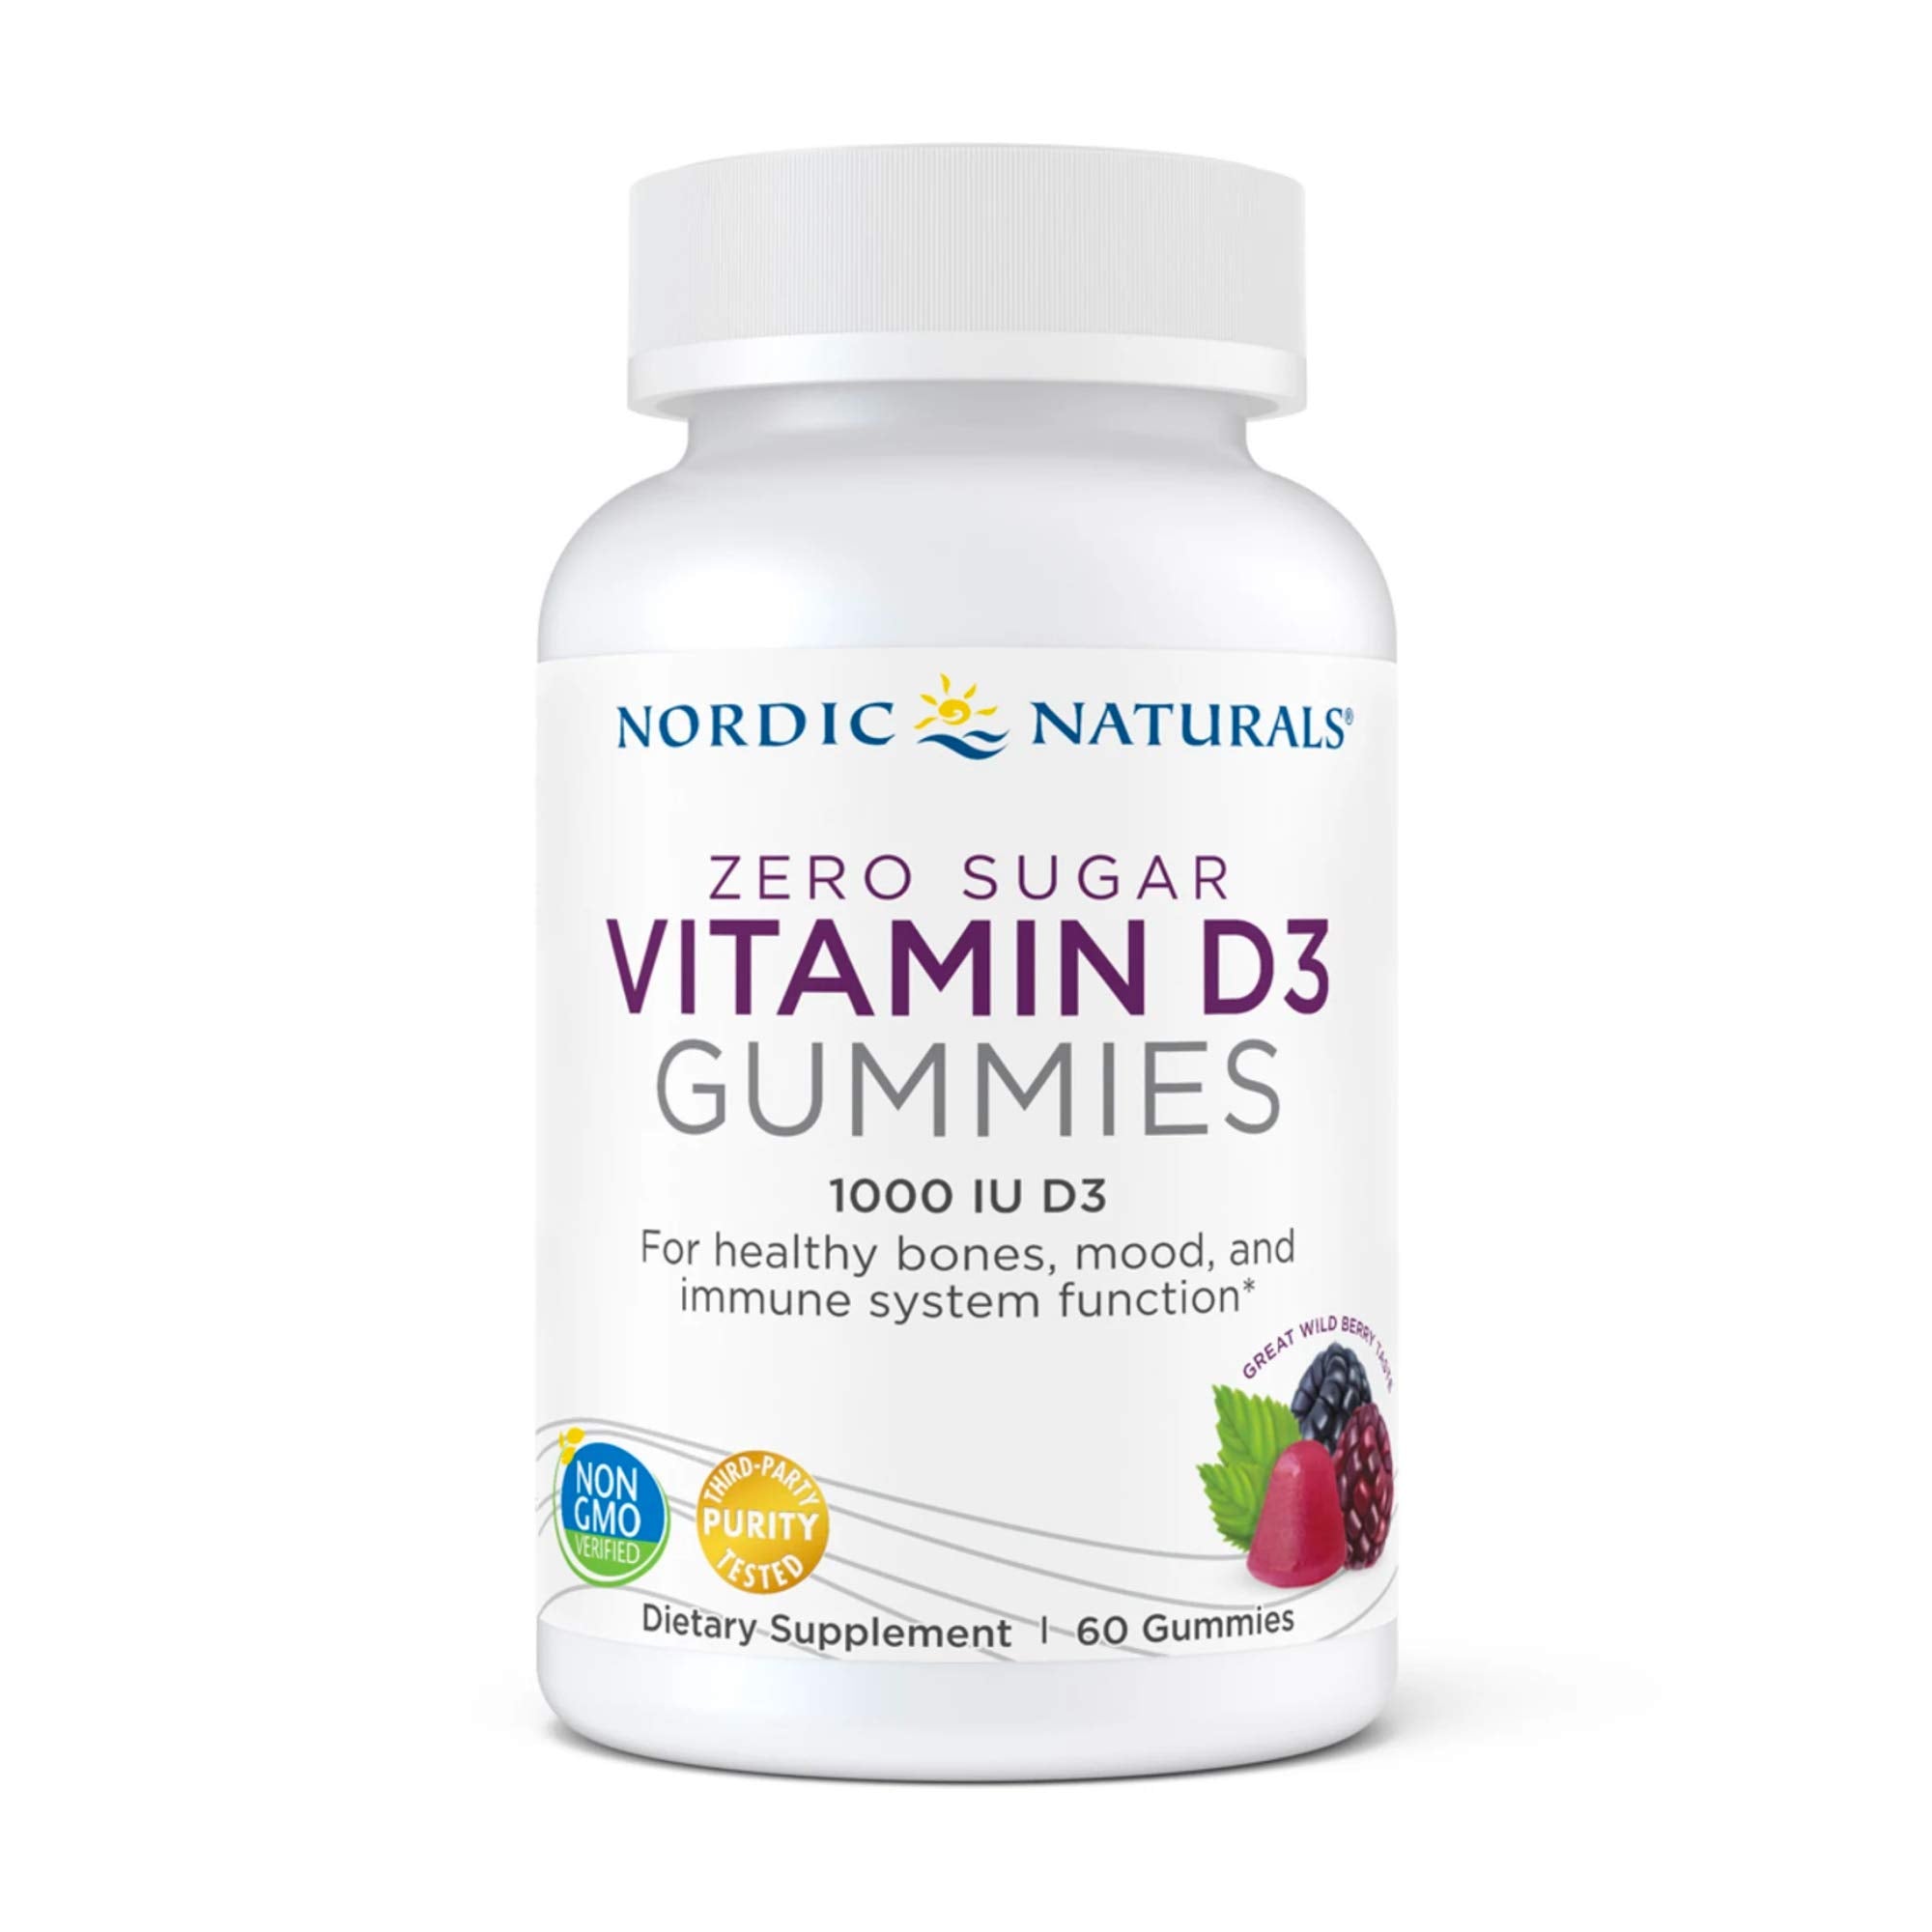 Nordic Naturals Zero Sugar Vitamin D3 Gummies, Wild Berry - 1000 IU Vitamin D3-60 Gummies - Great Taste - Healthy Bones, Mood & Immune System Function - Non-GMO - 60 Servings